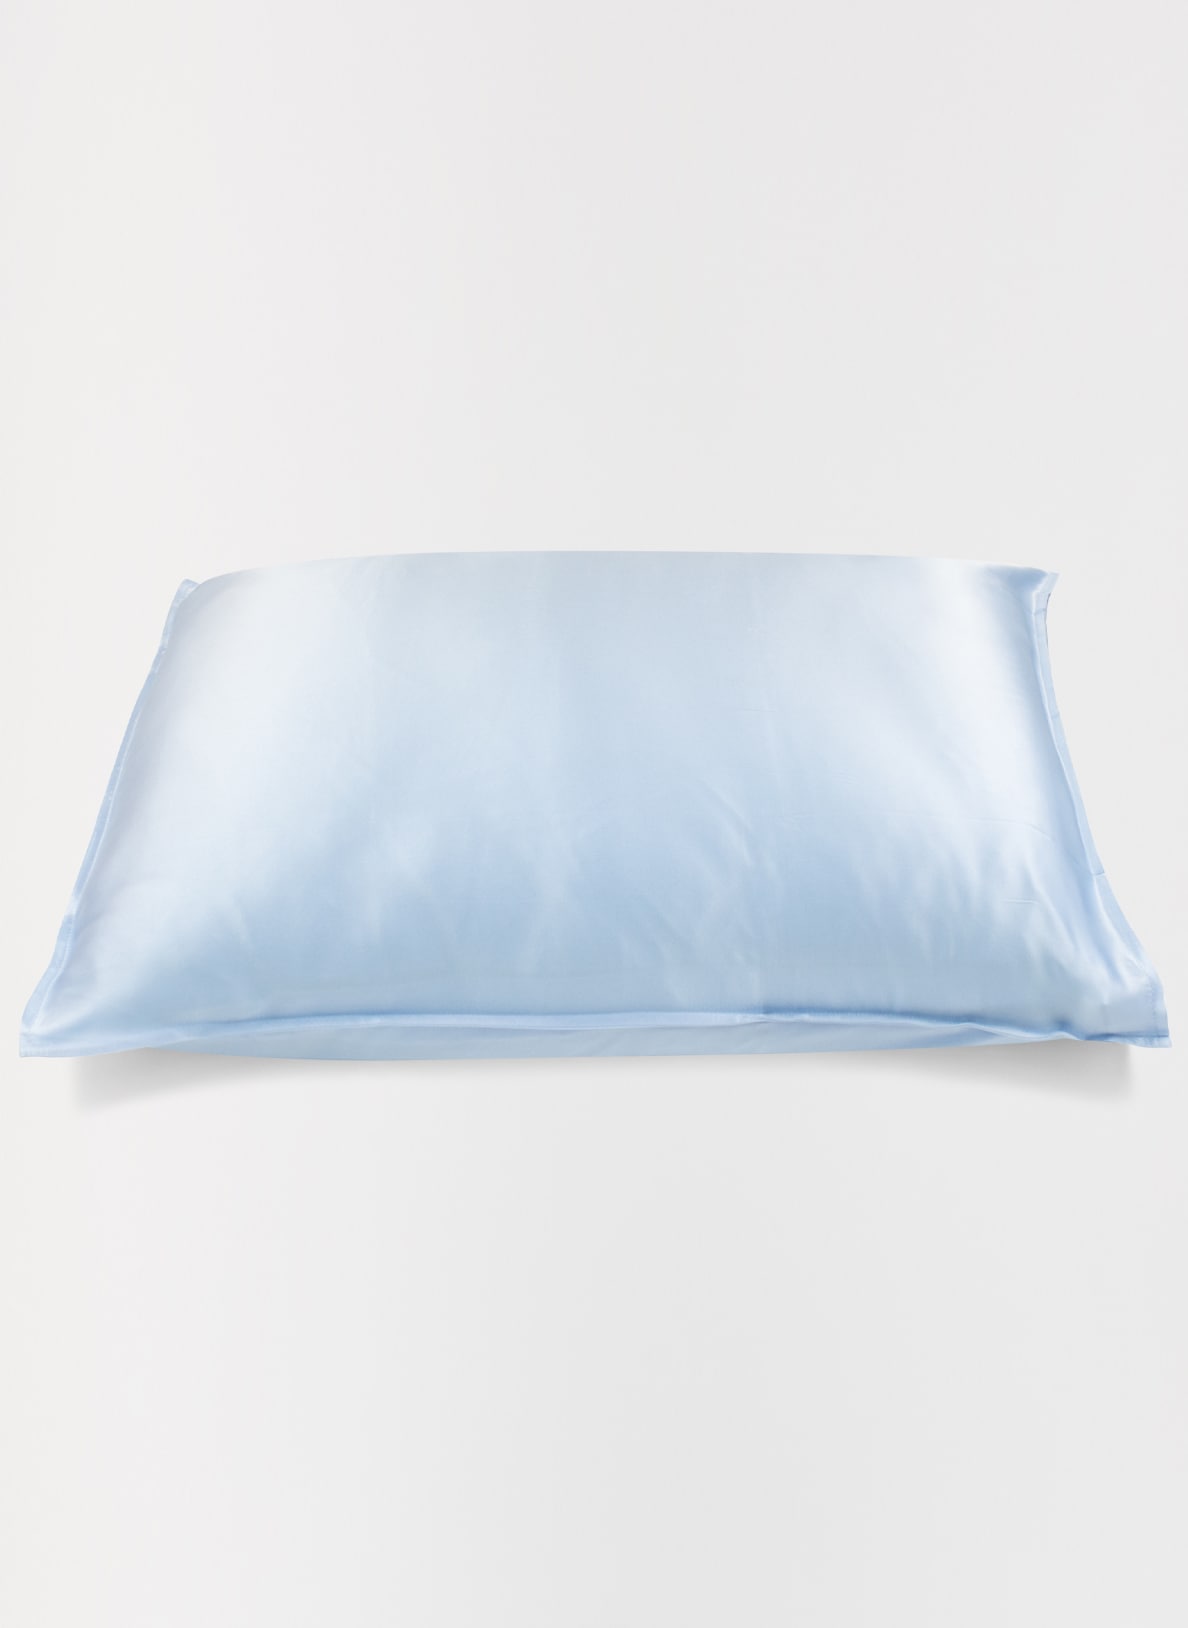 Silk Satin Pillowcase Light Blue